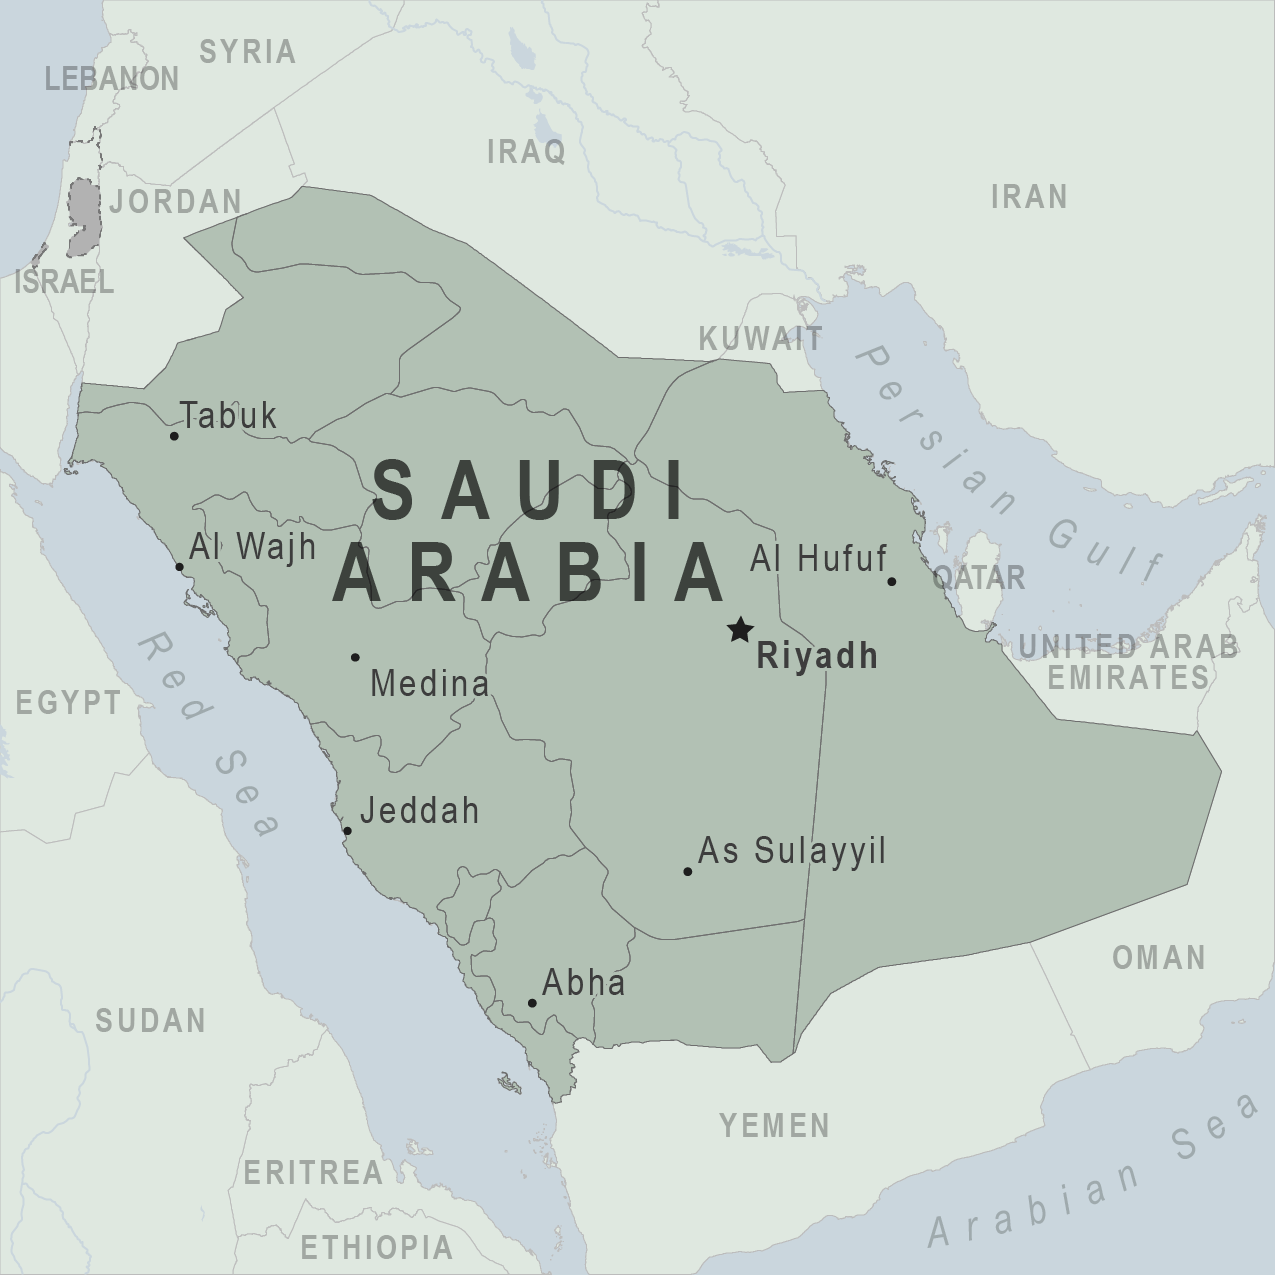 Name arabia 19 vaccine covid in saudi List of